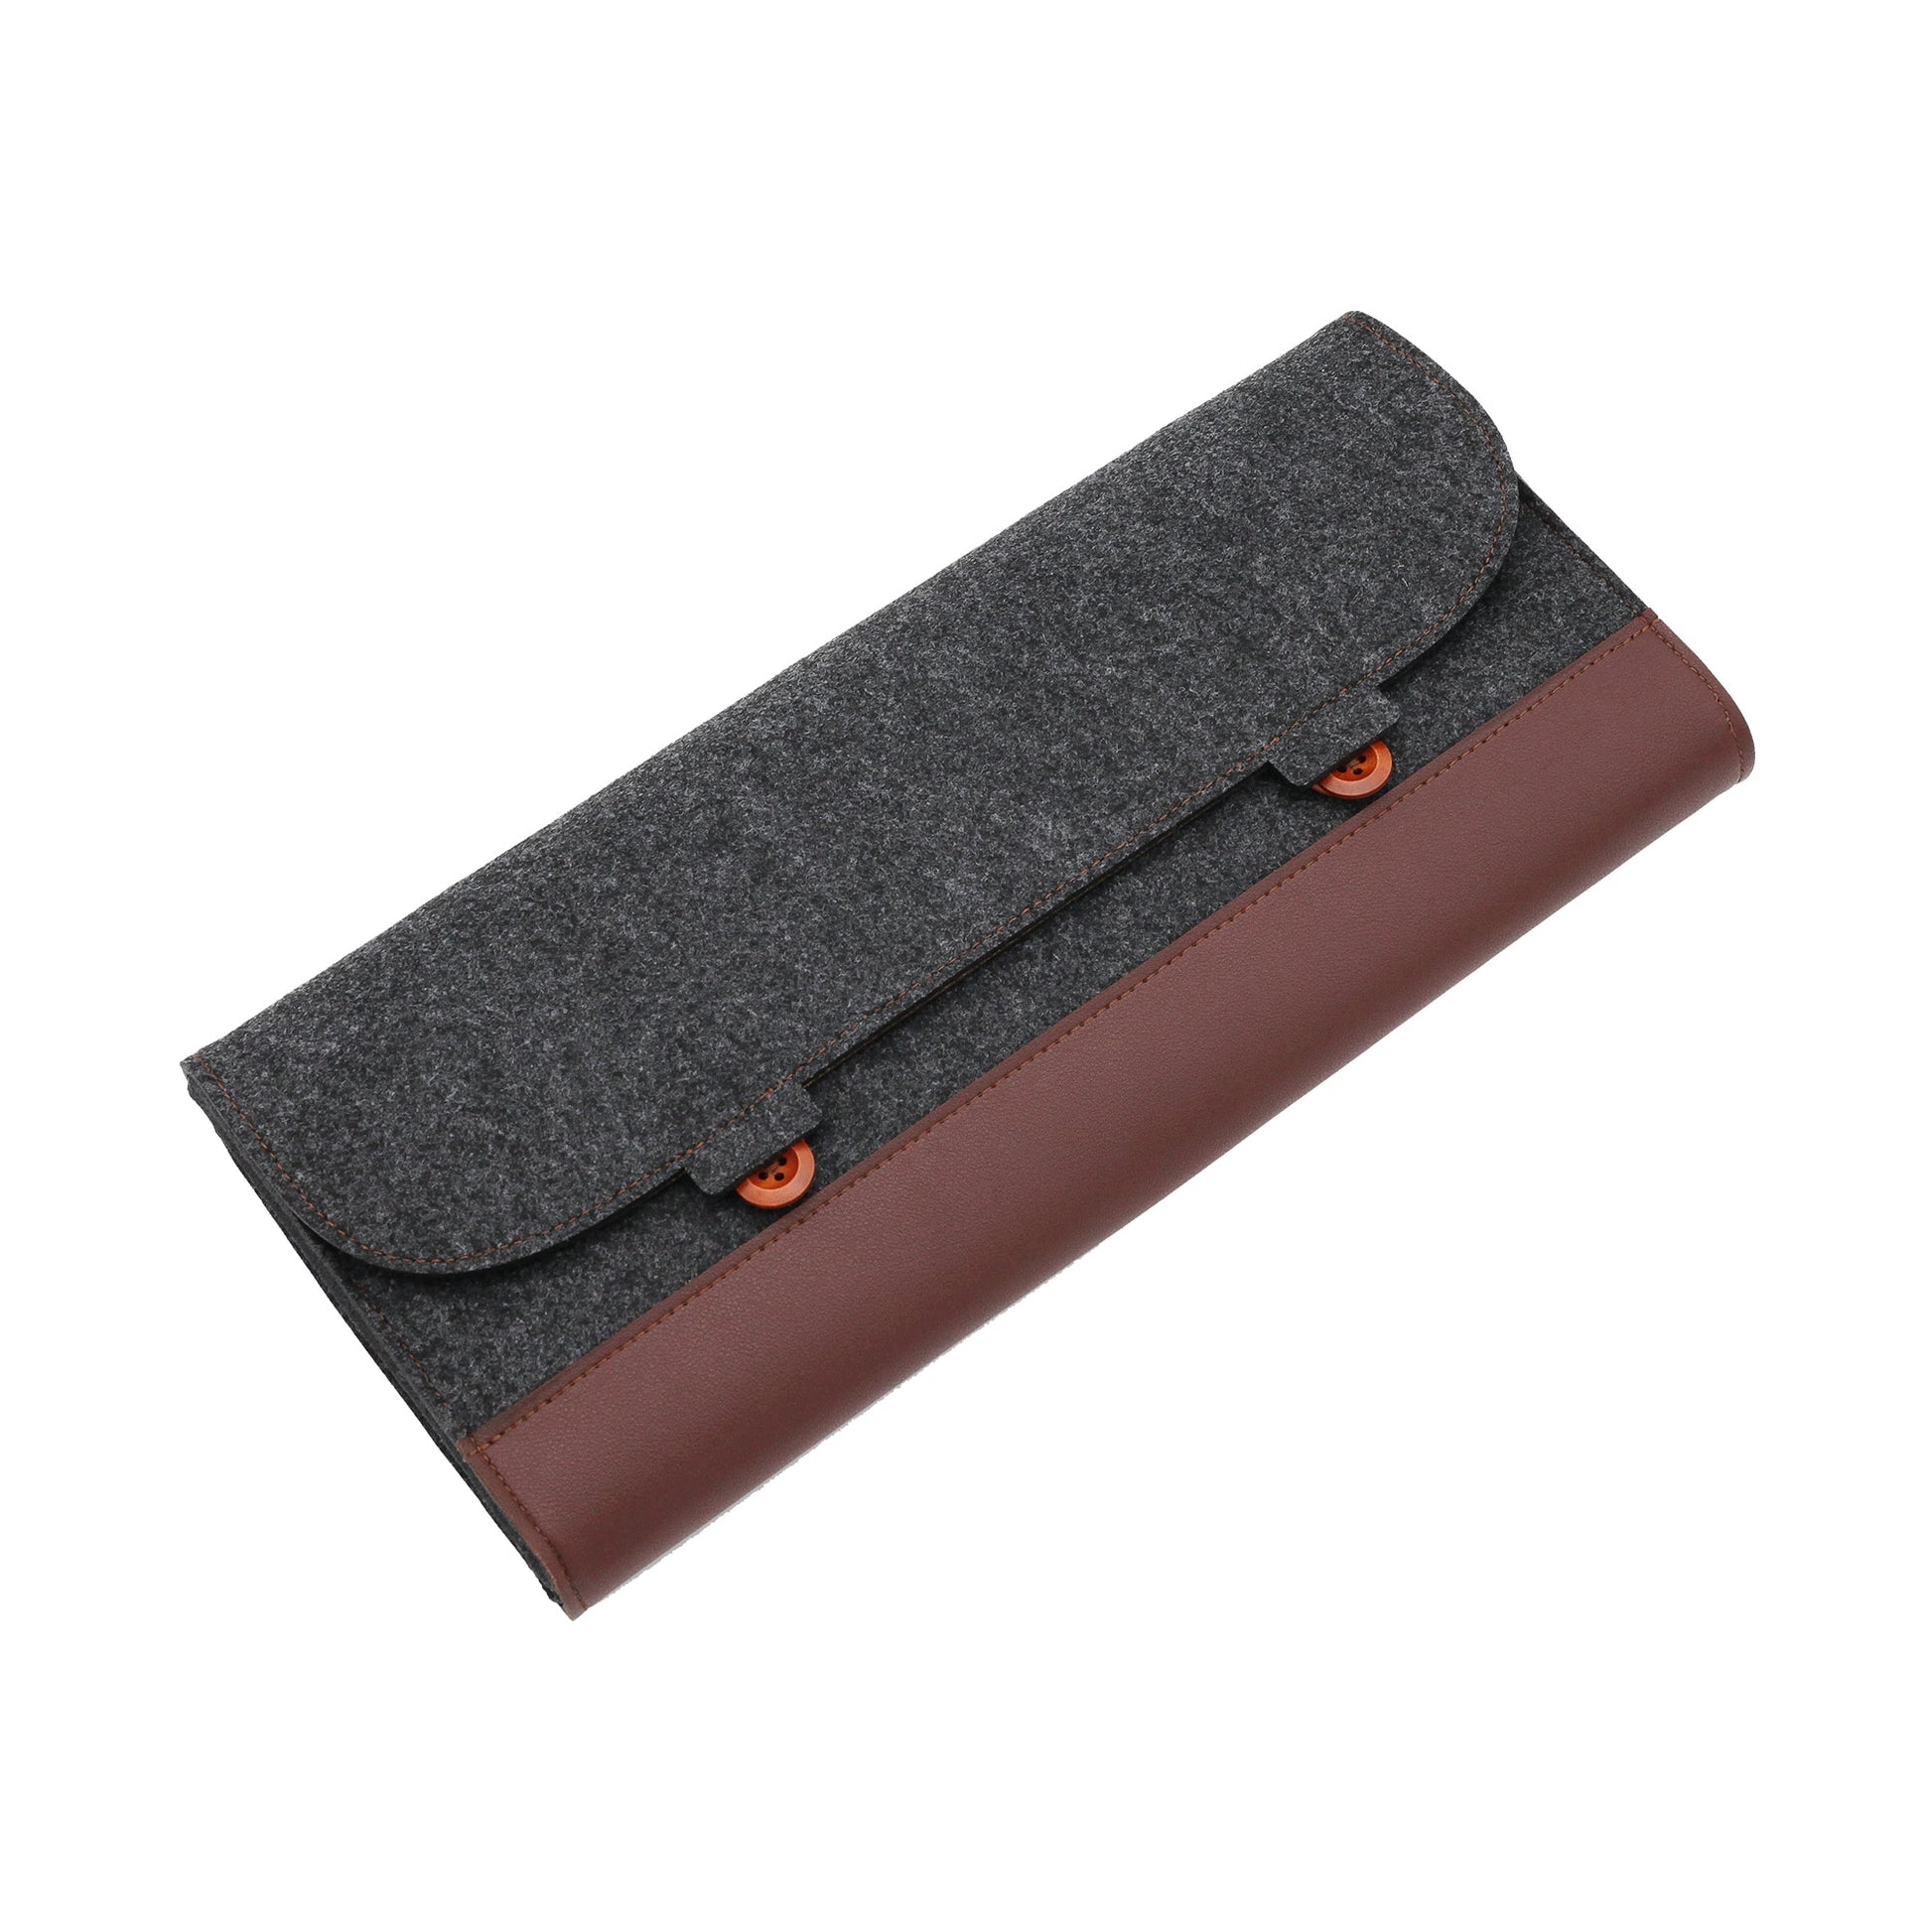 PU Felt keyboard carrying case bag for 40% 60% 80% 100% Mechanical Keyboard  Custom Keyboards UK   